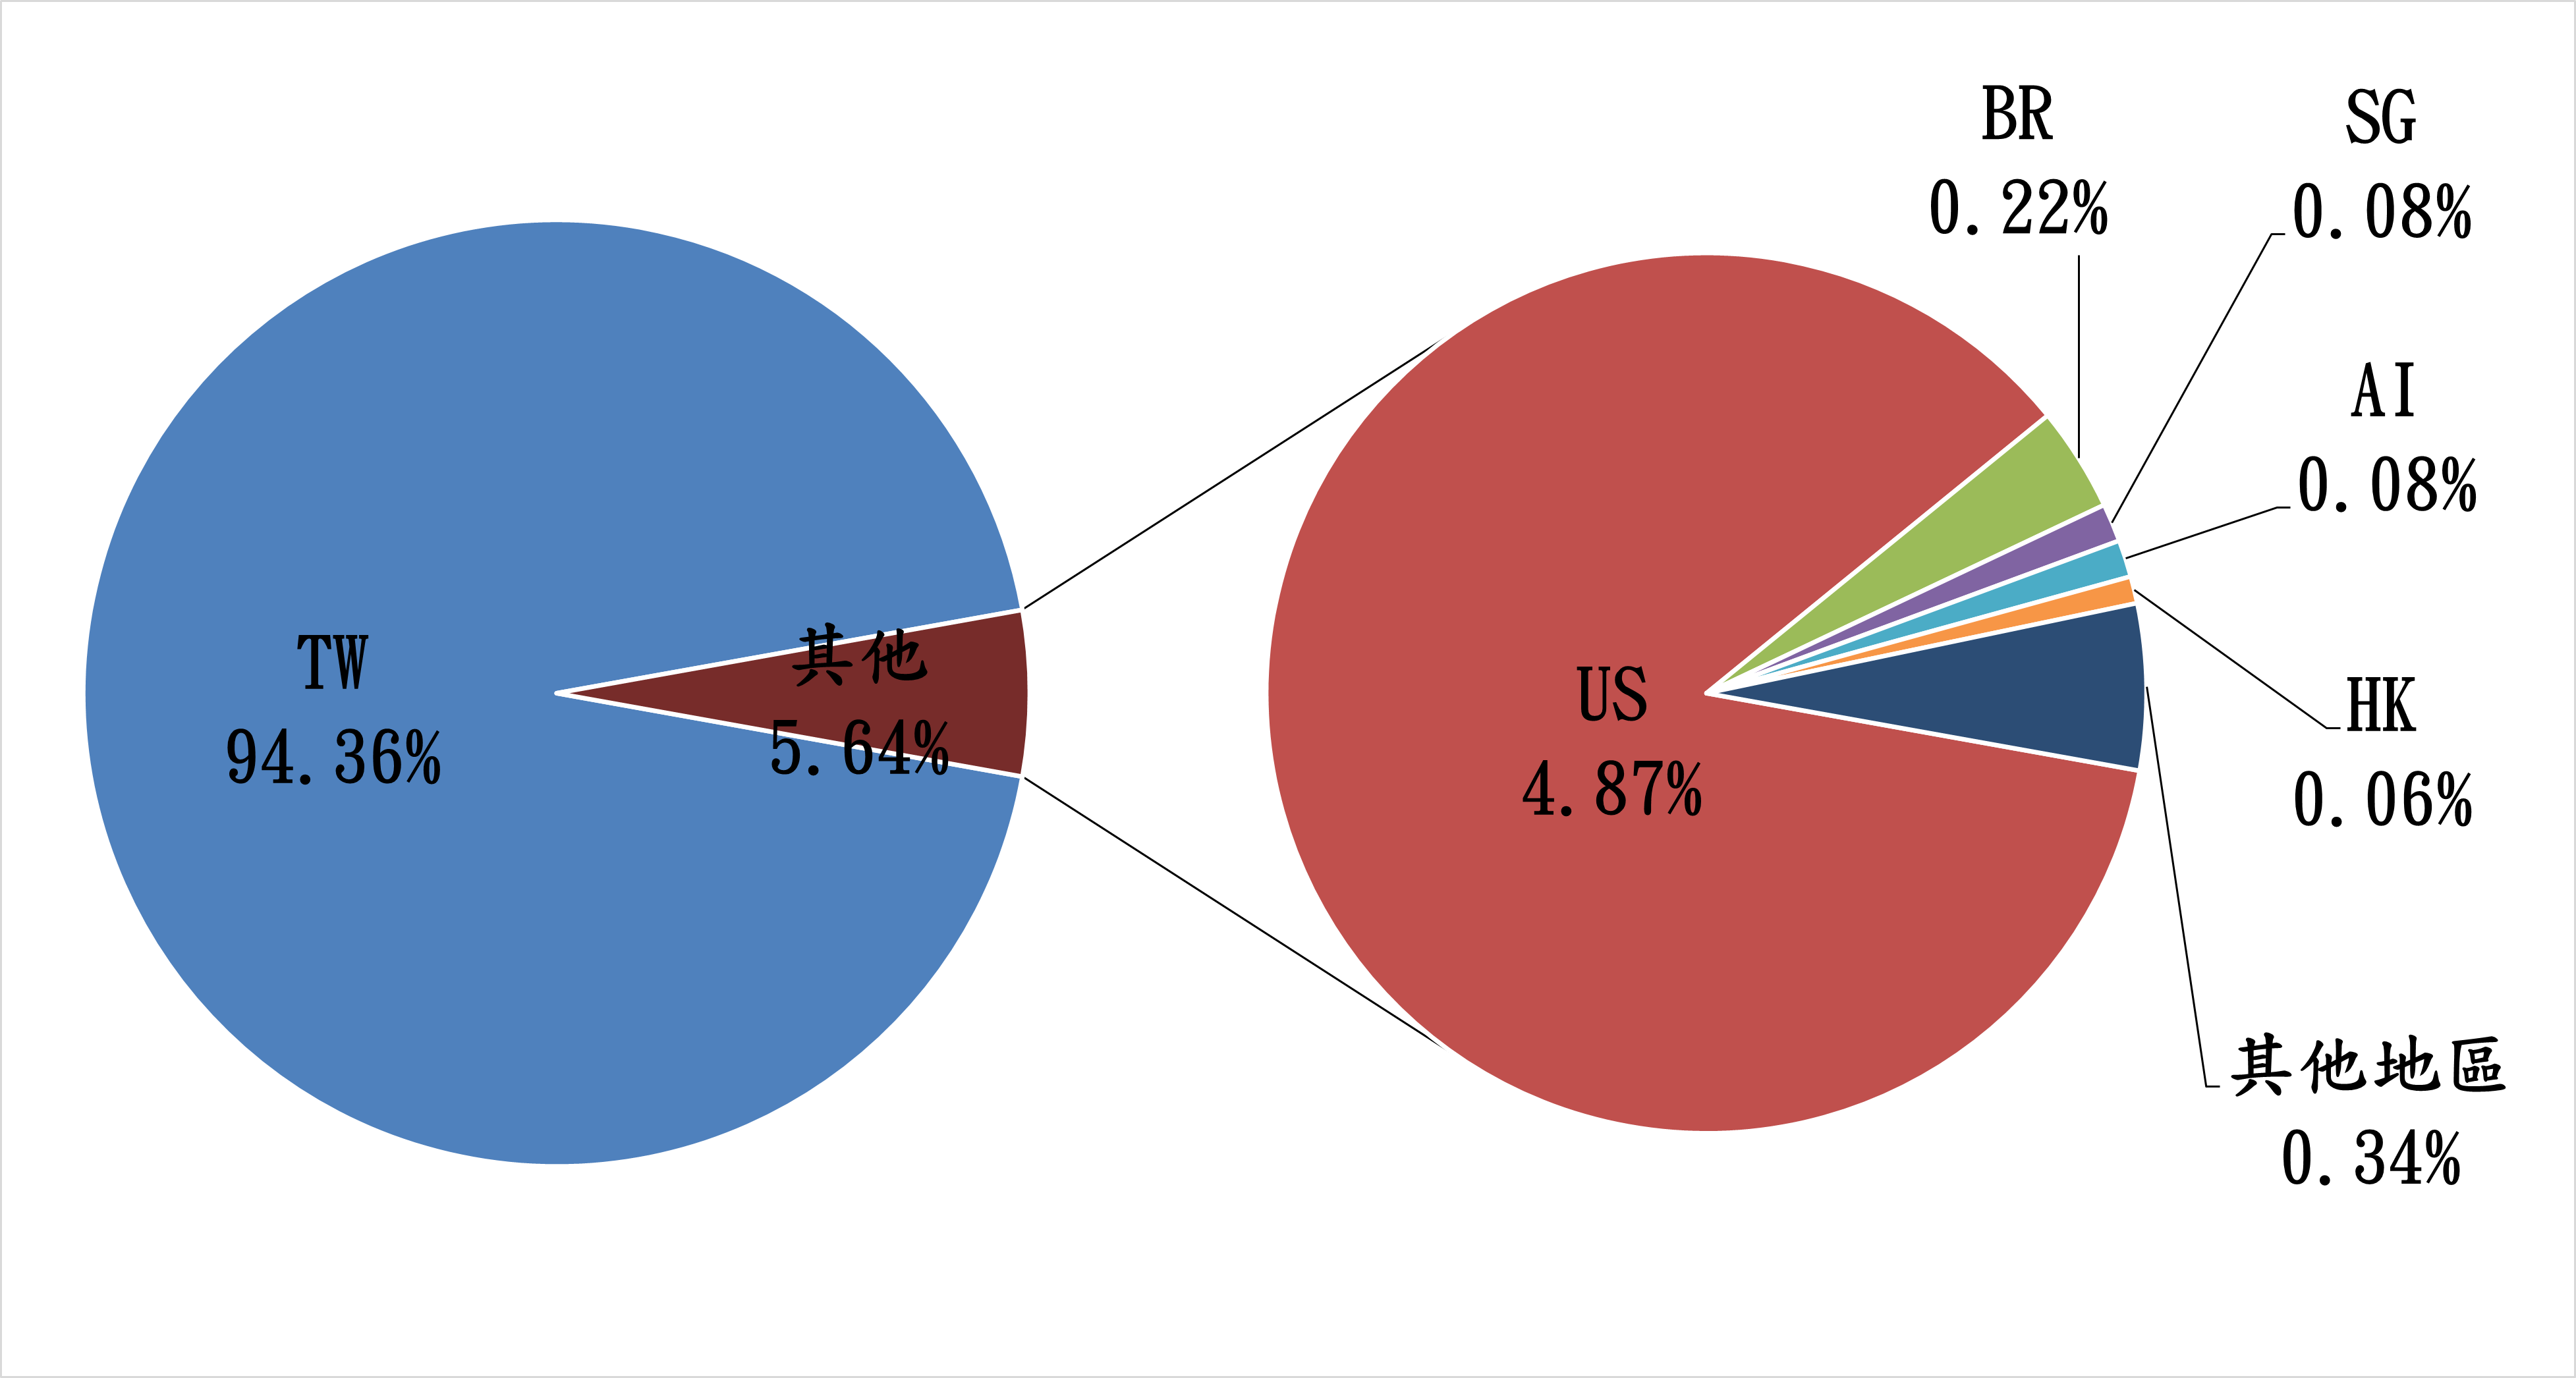 TW94.36% 其他5.64% US4.87% BR0.22% SG0.08% AI0.08% HK0.06% 其他地區0.34%